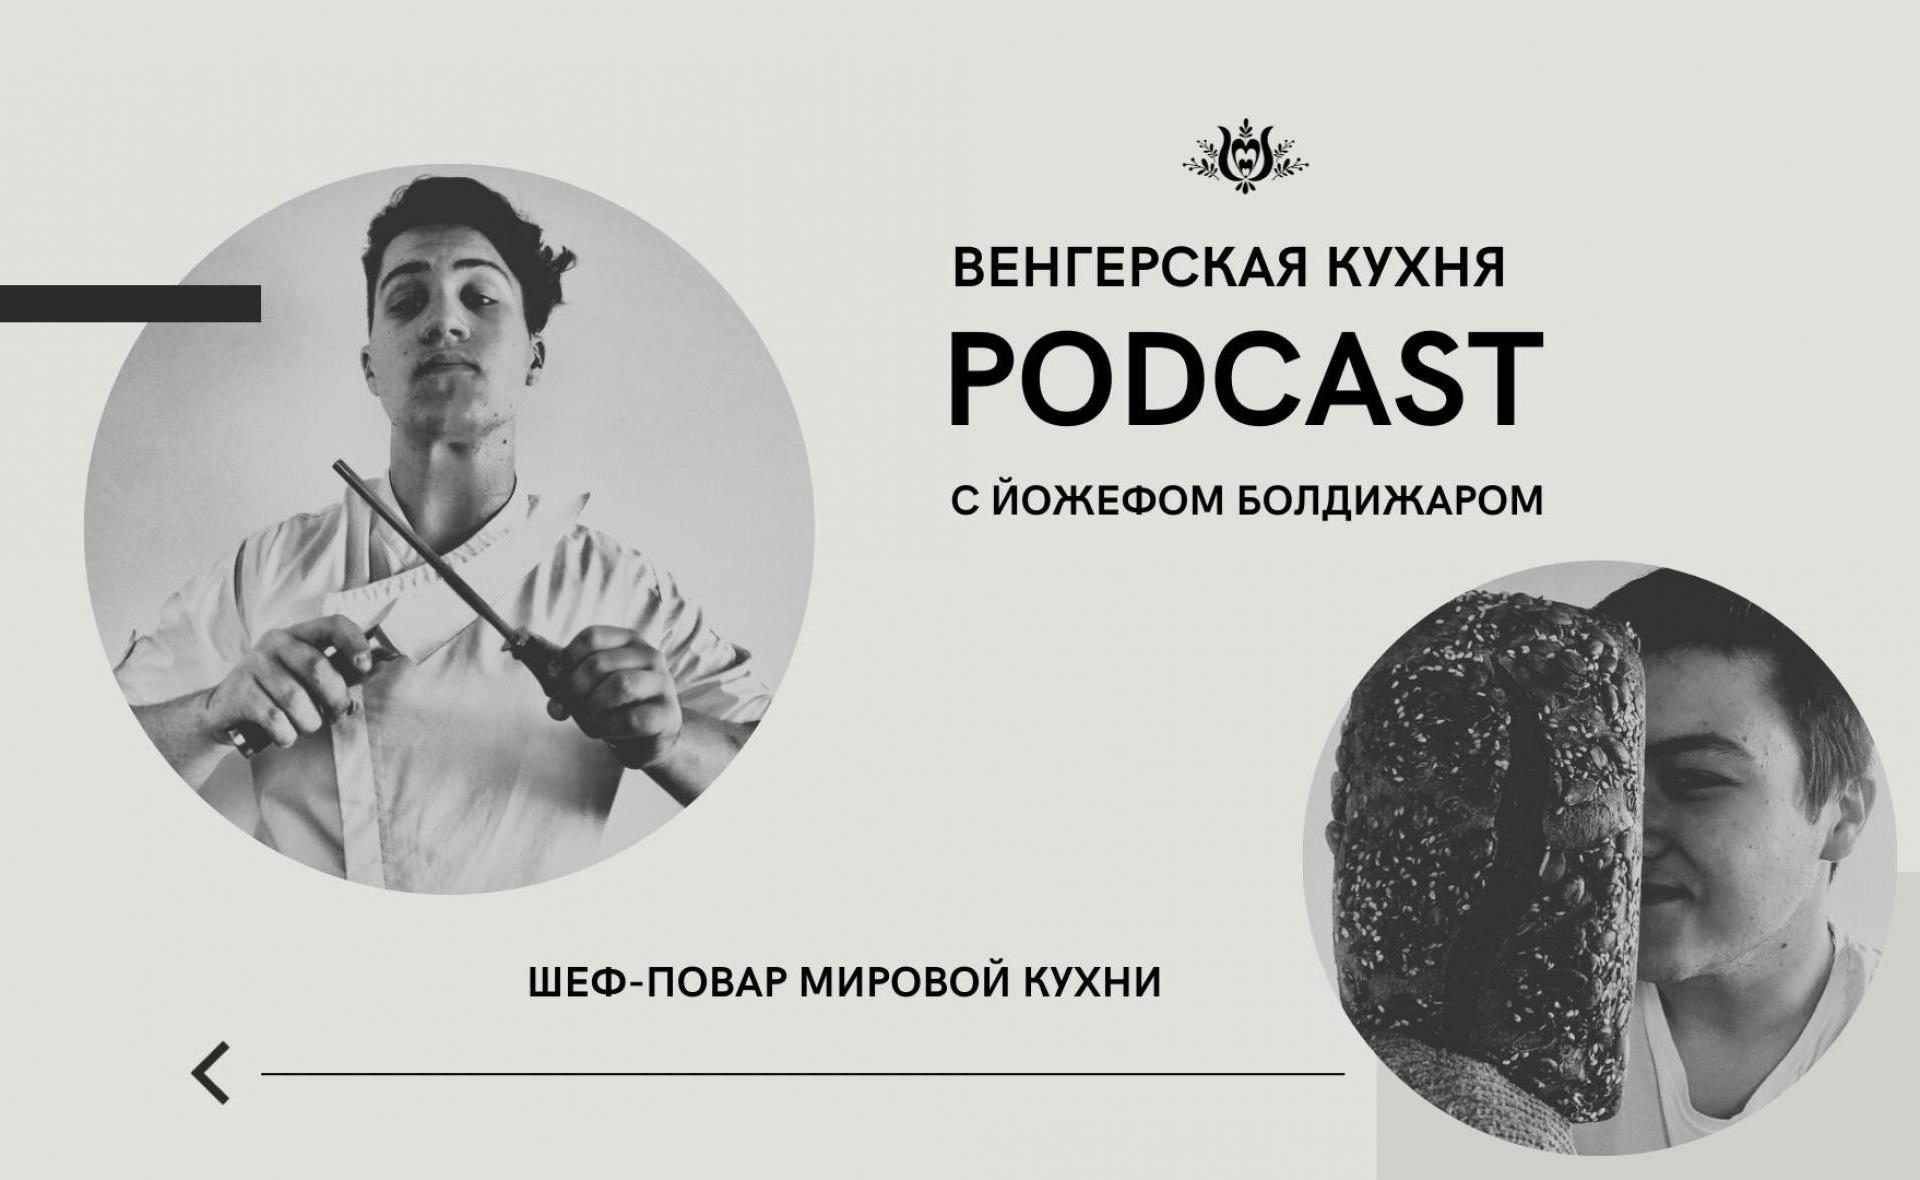 Podcast| Magyar konyha